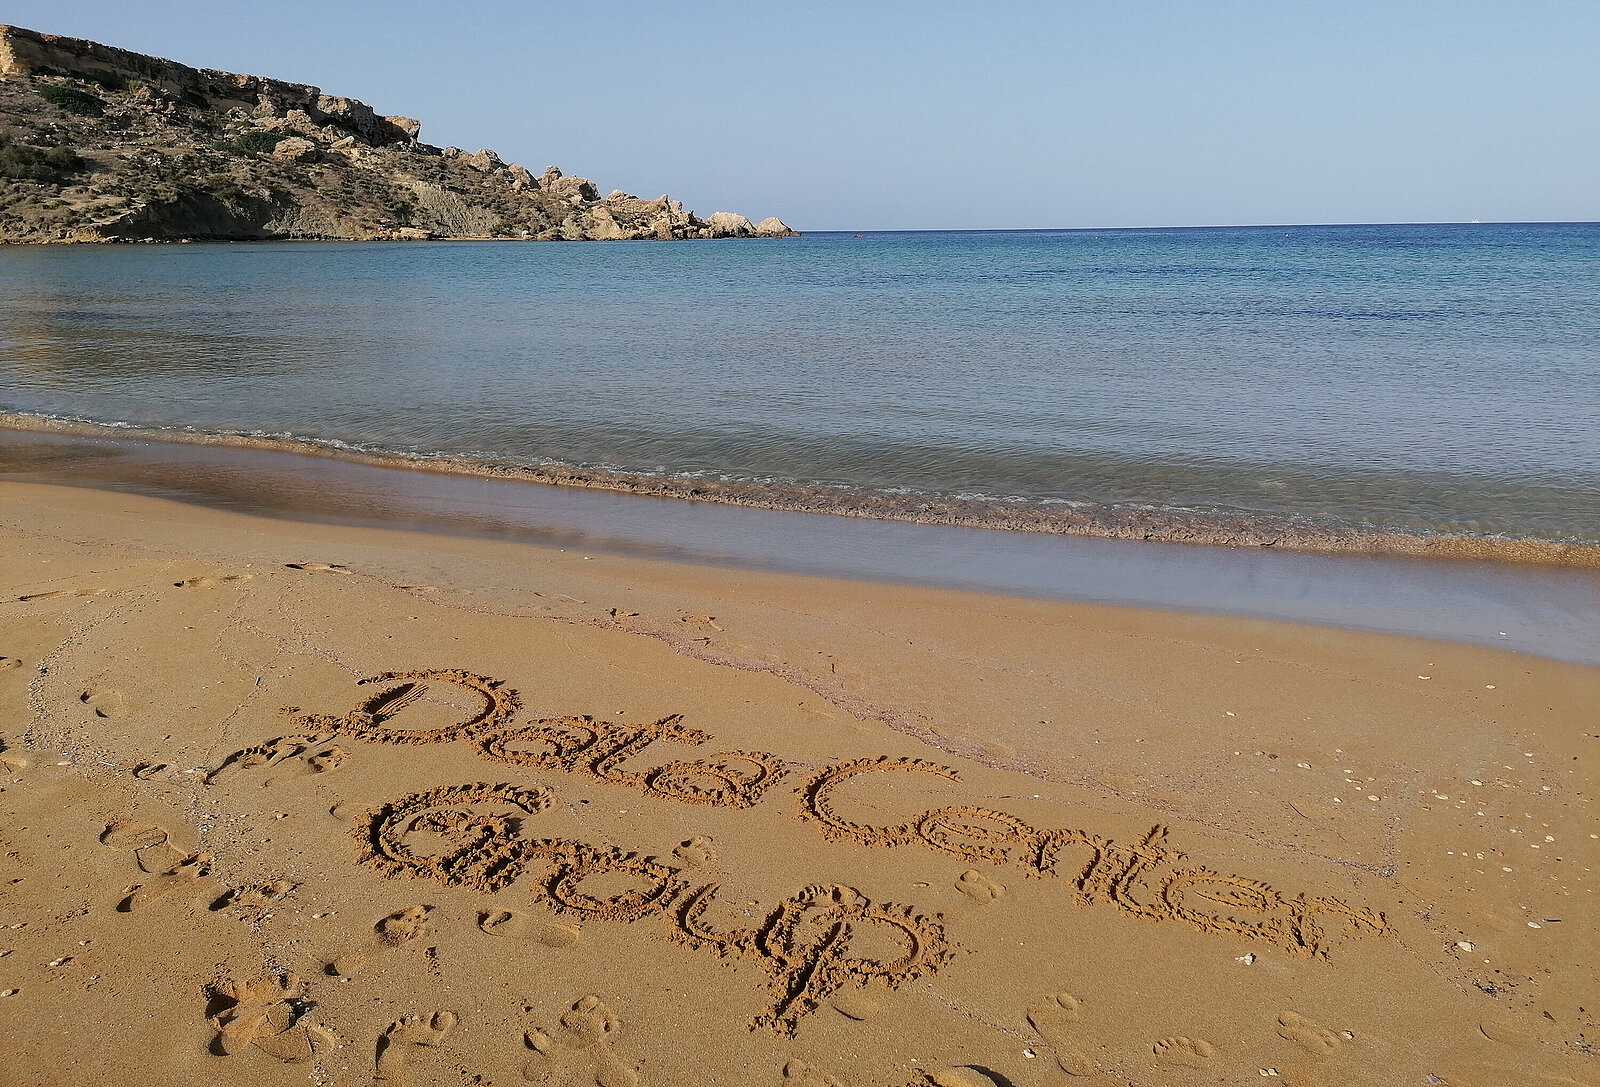 Sandy beach in Malta, where Data Center Group is written in the sand